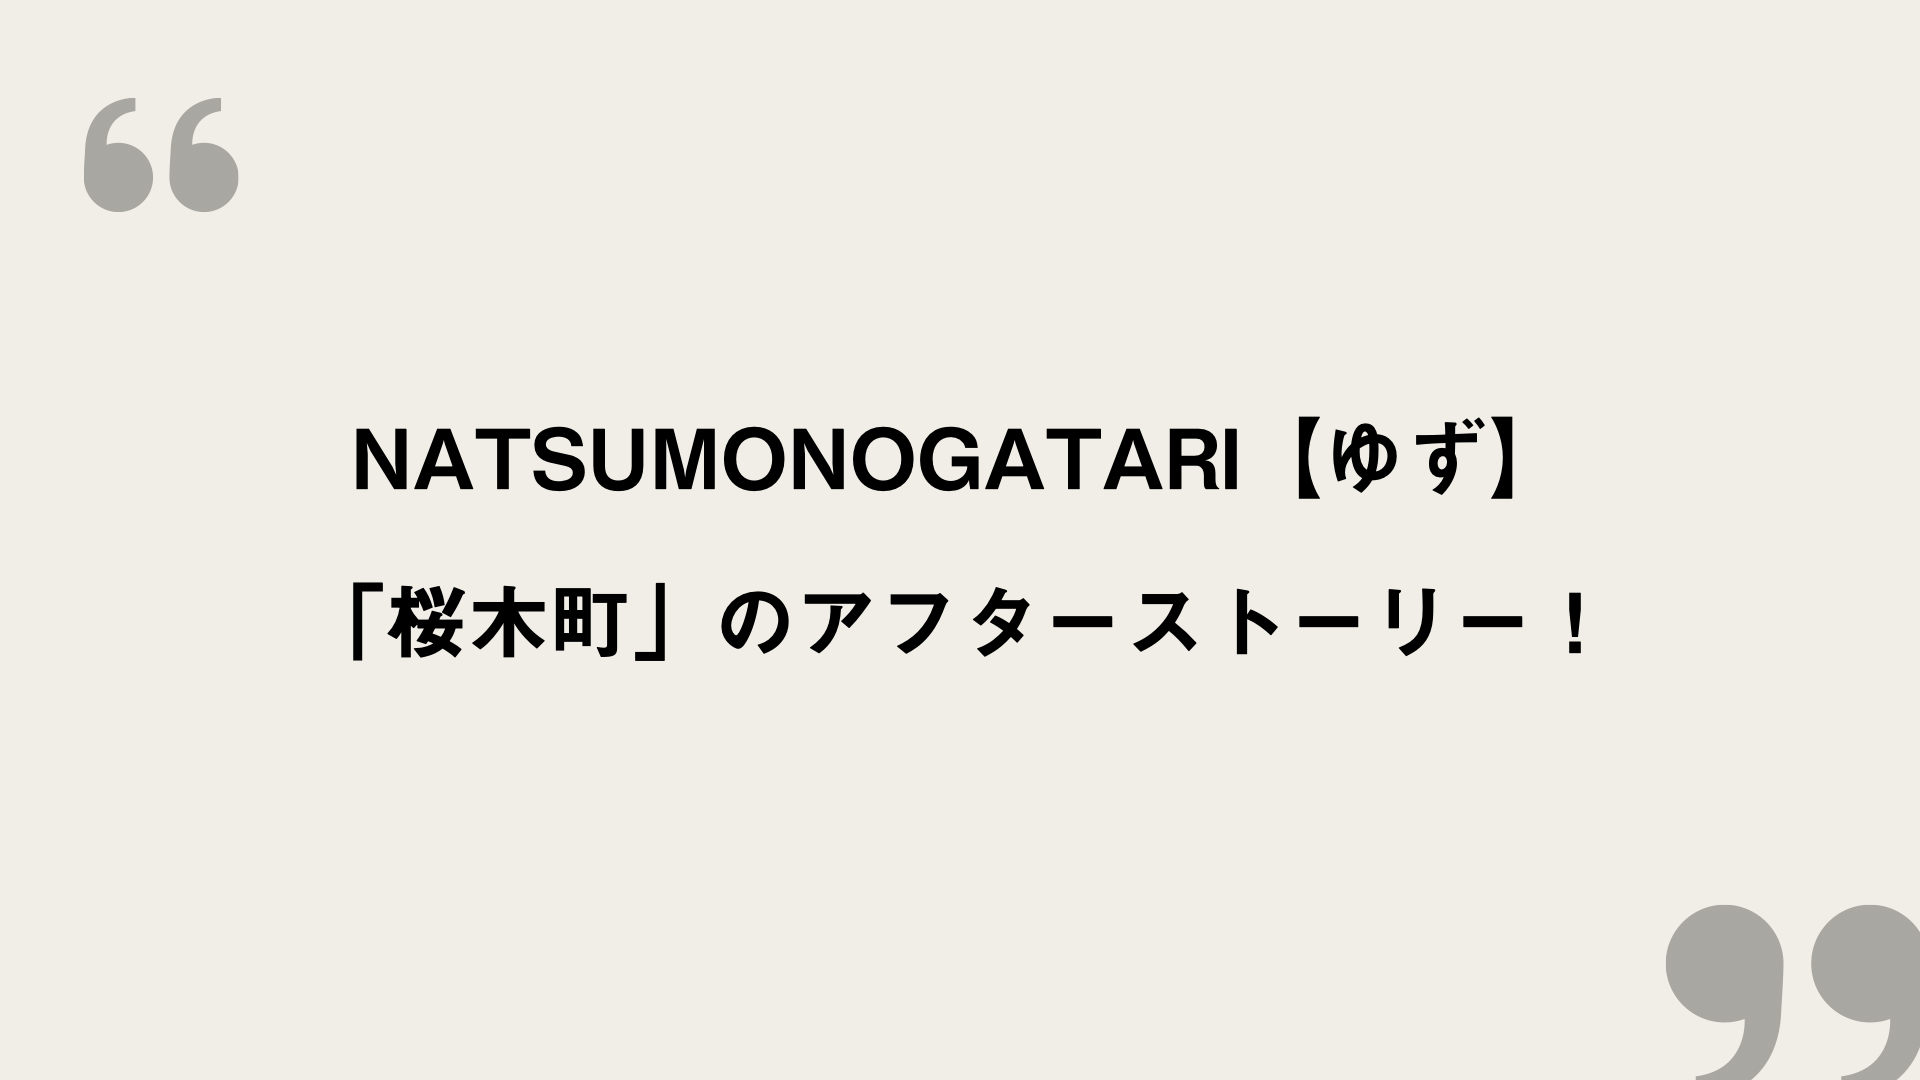 Natsumonogatari ゆず 歌詞の意味を考察 桜木町 のアフターストーリー Framu Media